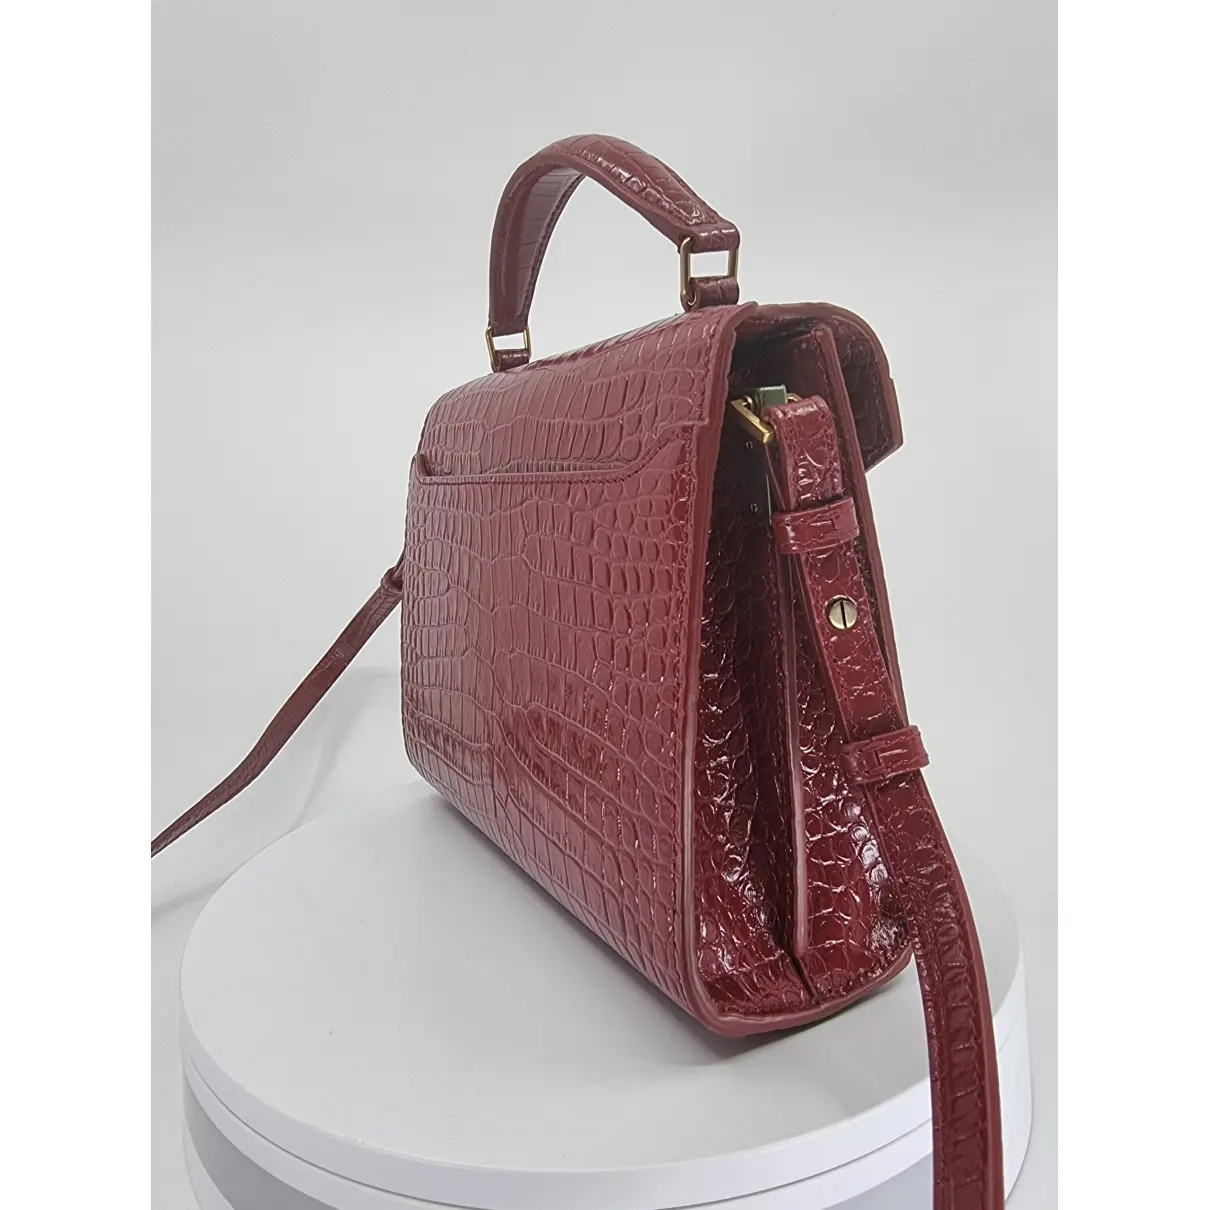 Buy Saint Laurent Cassandra leather handbag online